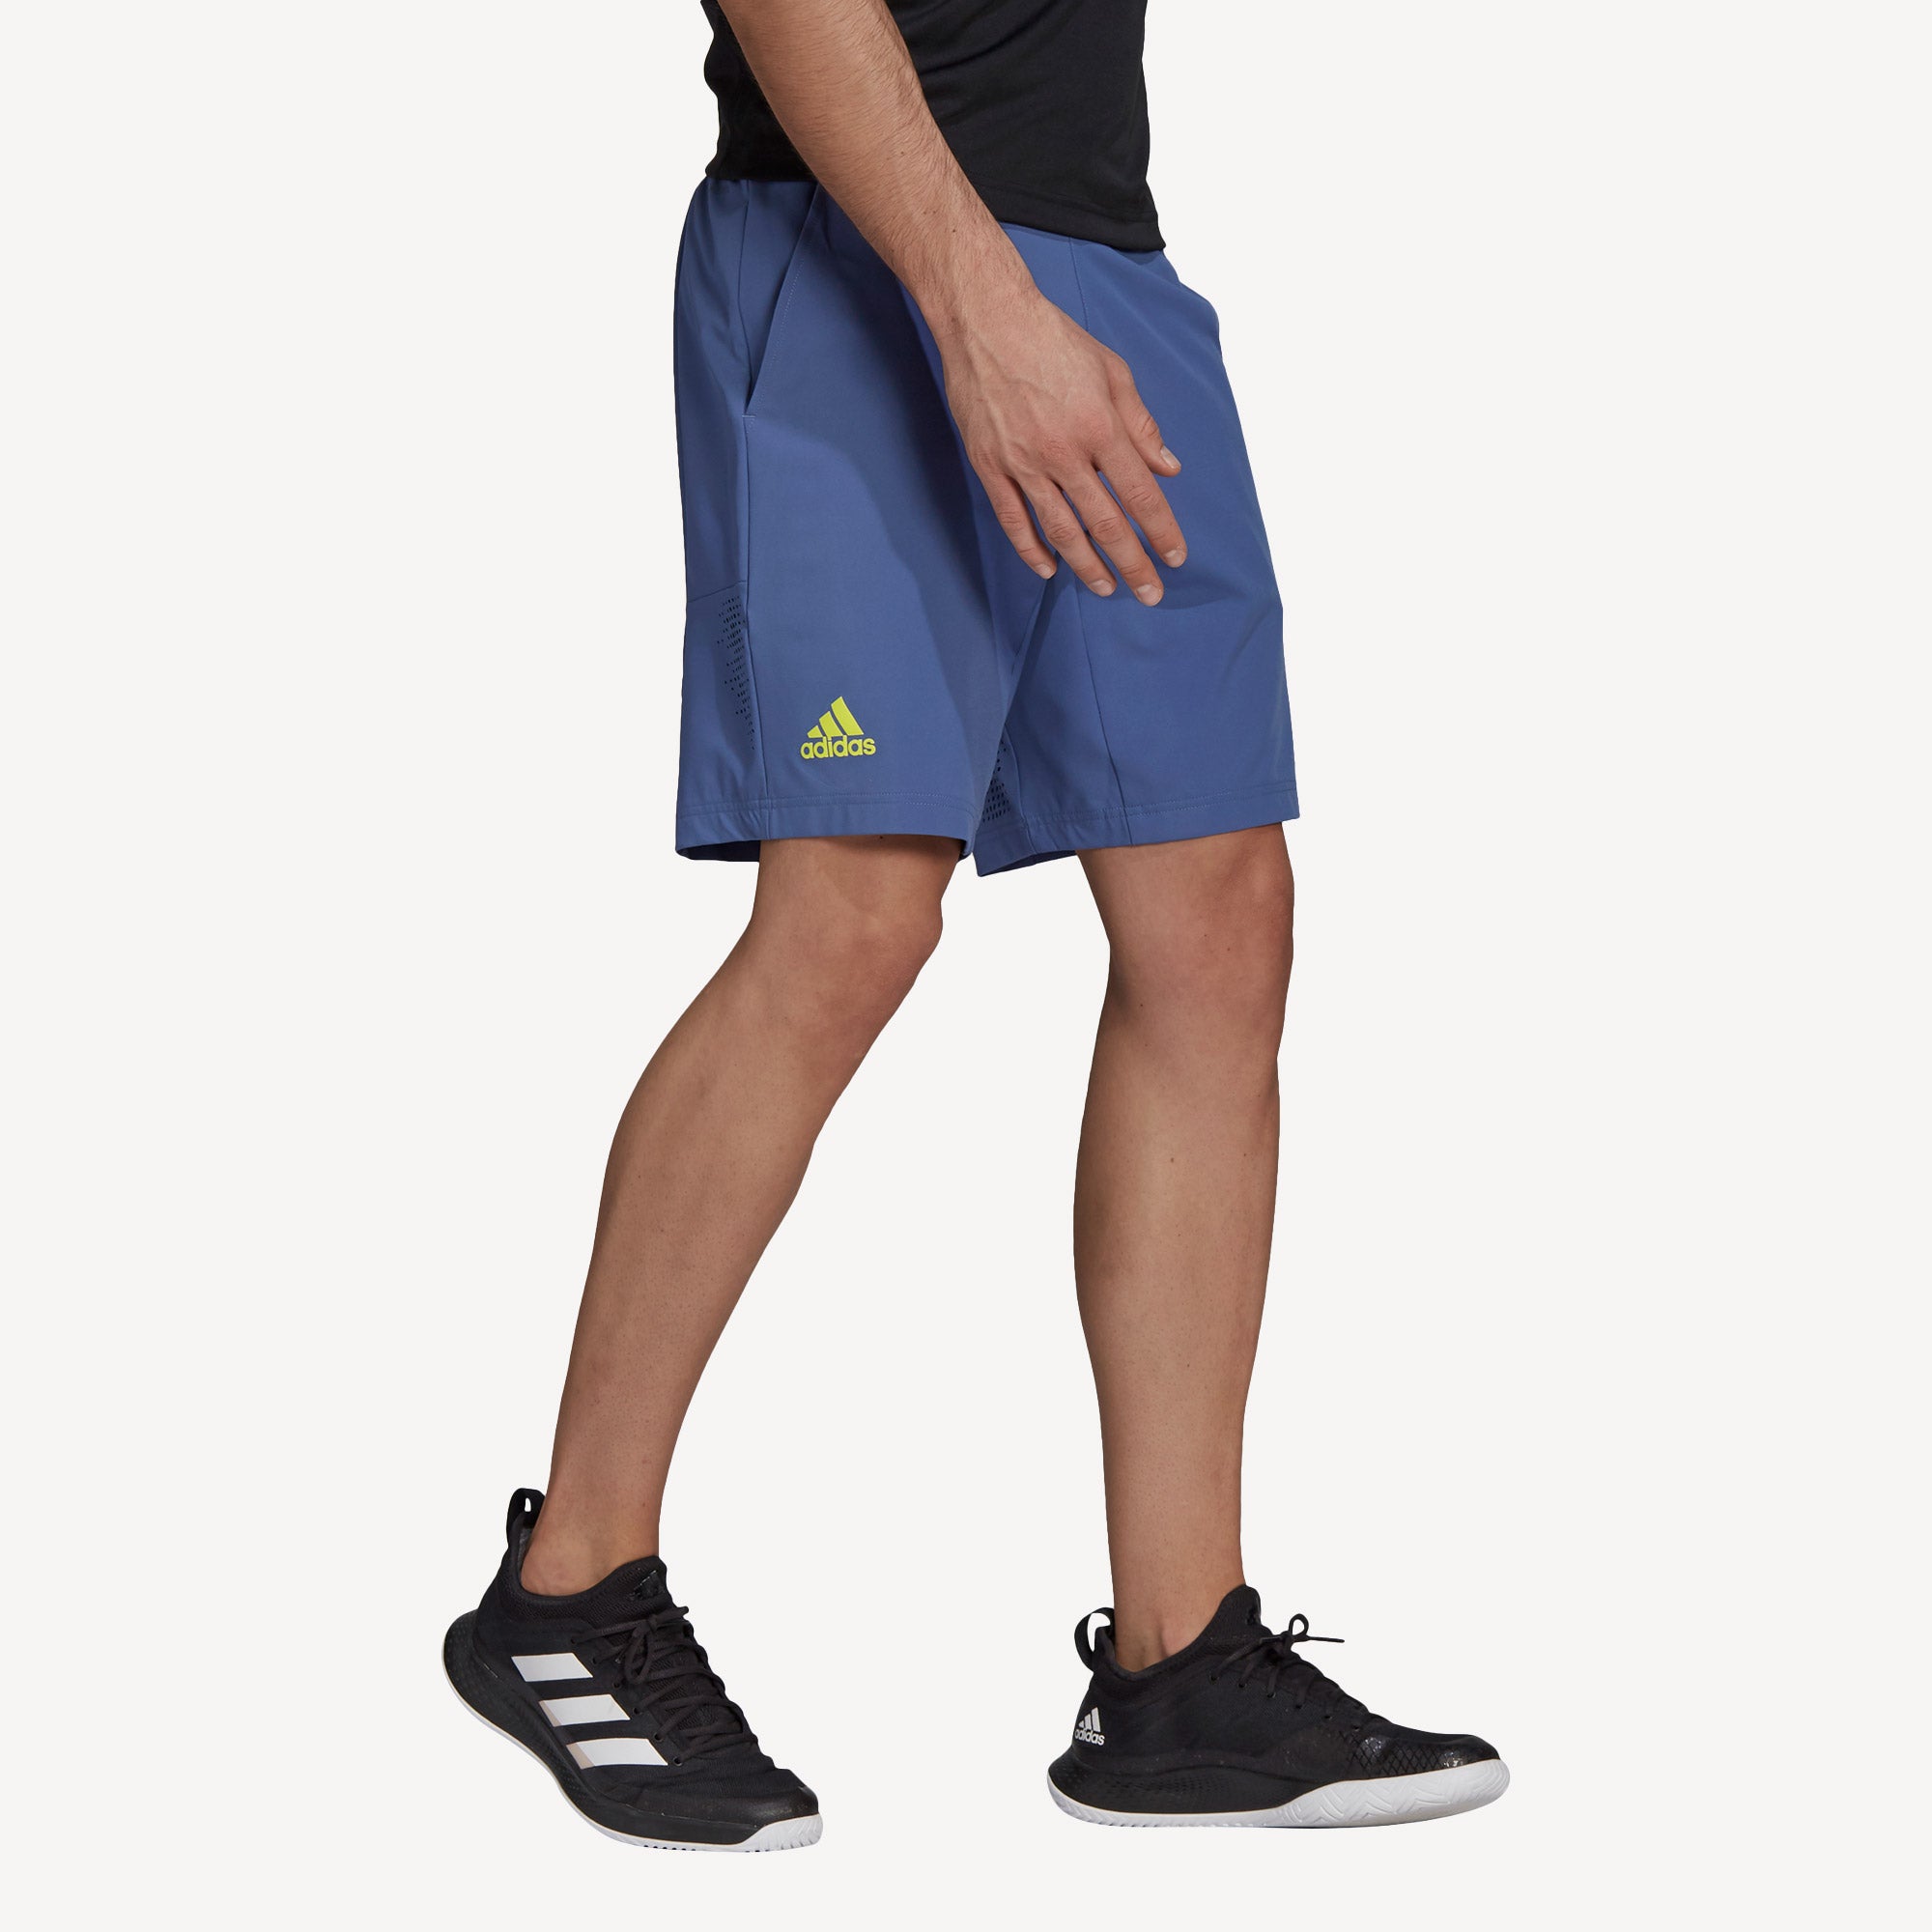 adidas Ergo Primeblue Men's 9-Inch Tennis Shorts Blue (3)